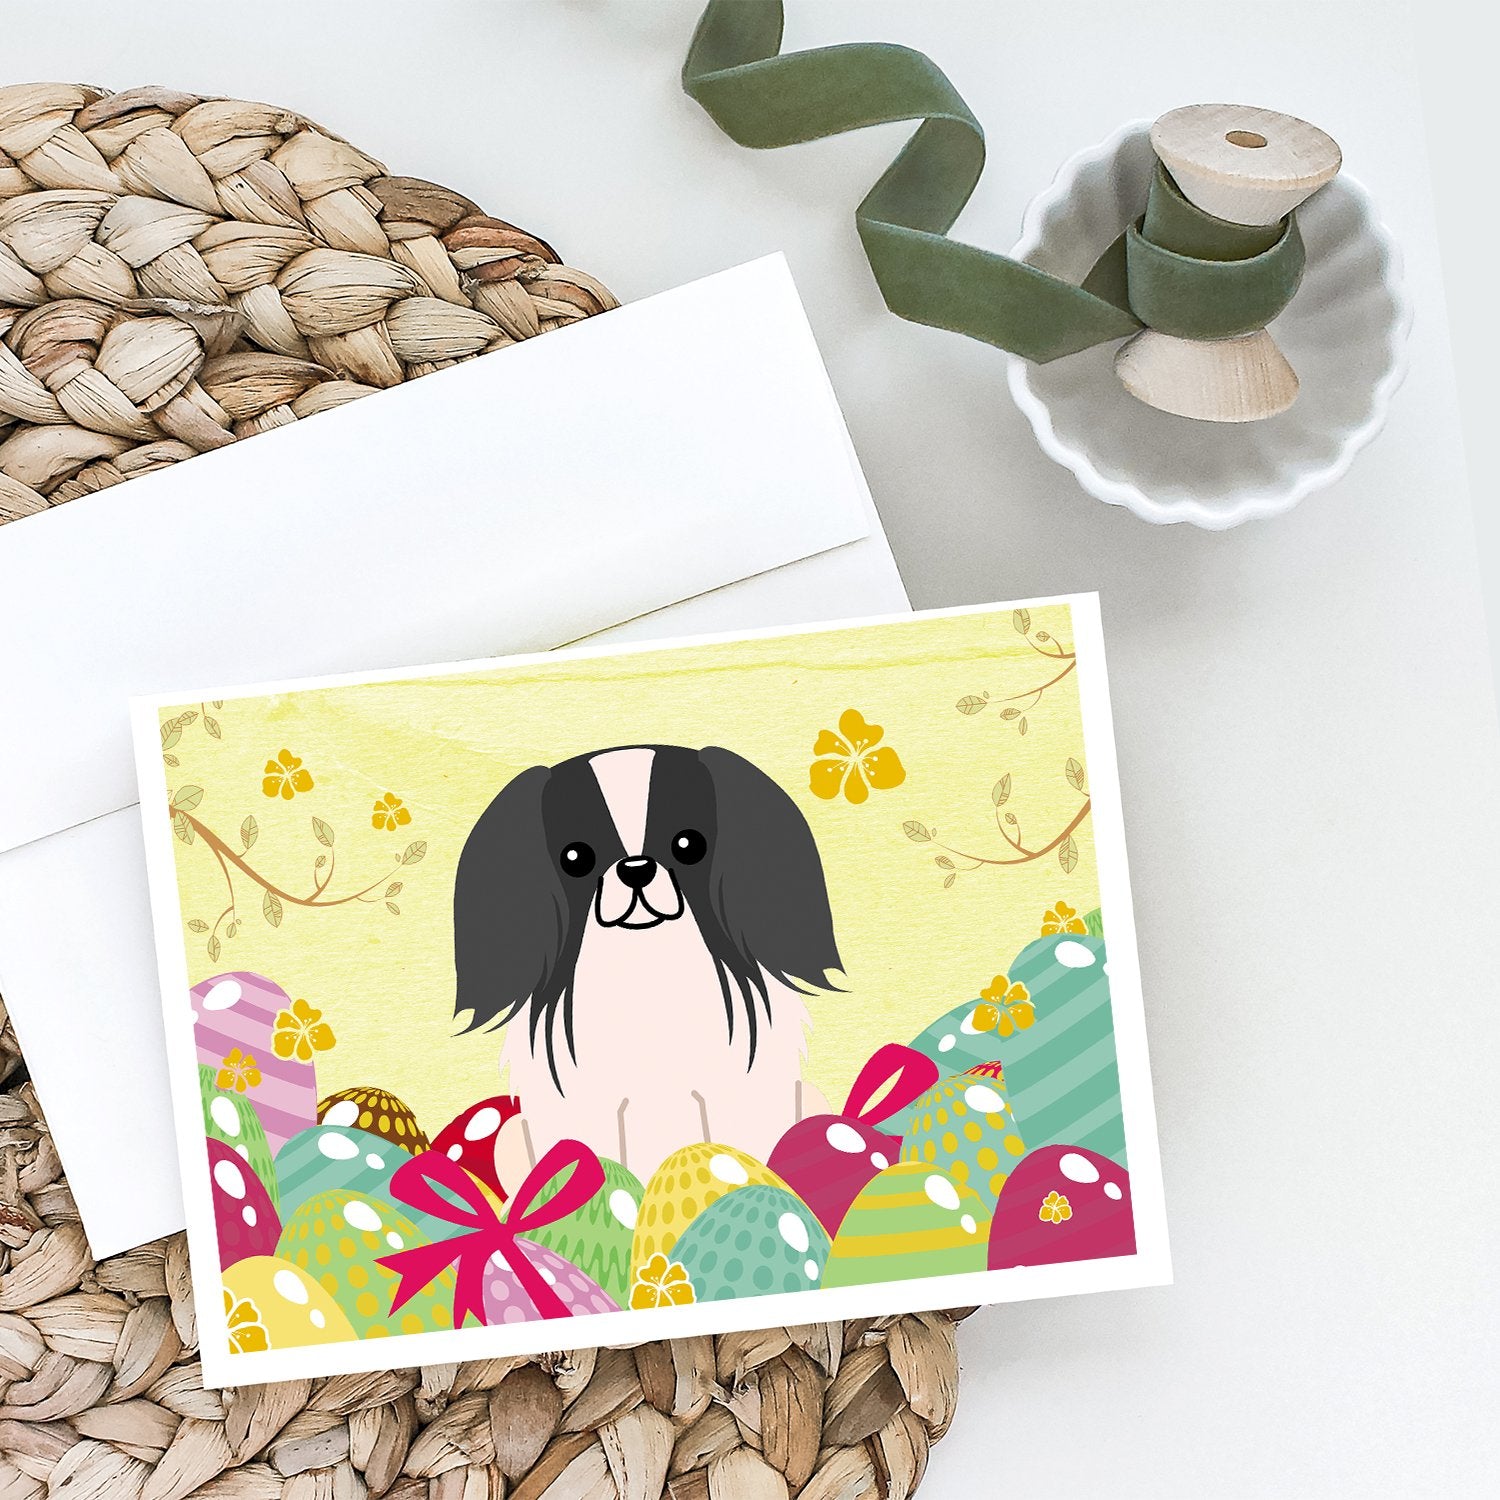 Buy this Easter Eggs Pekingese Black White Greeting Cards and Envelopes Pack of 8